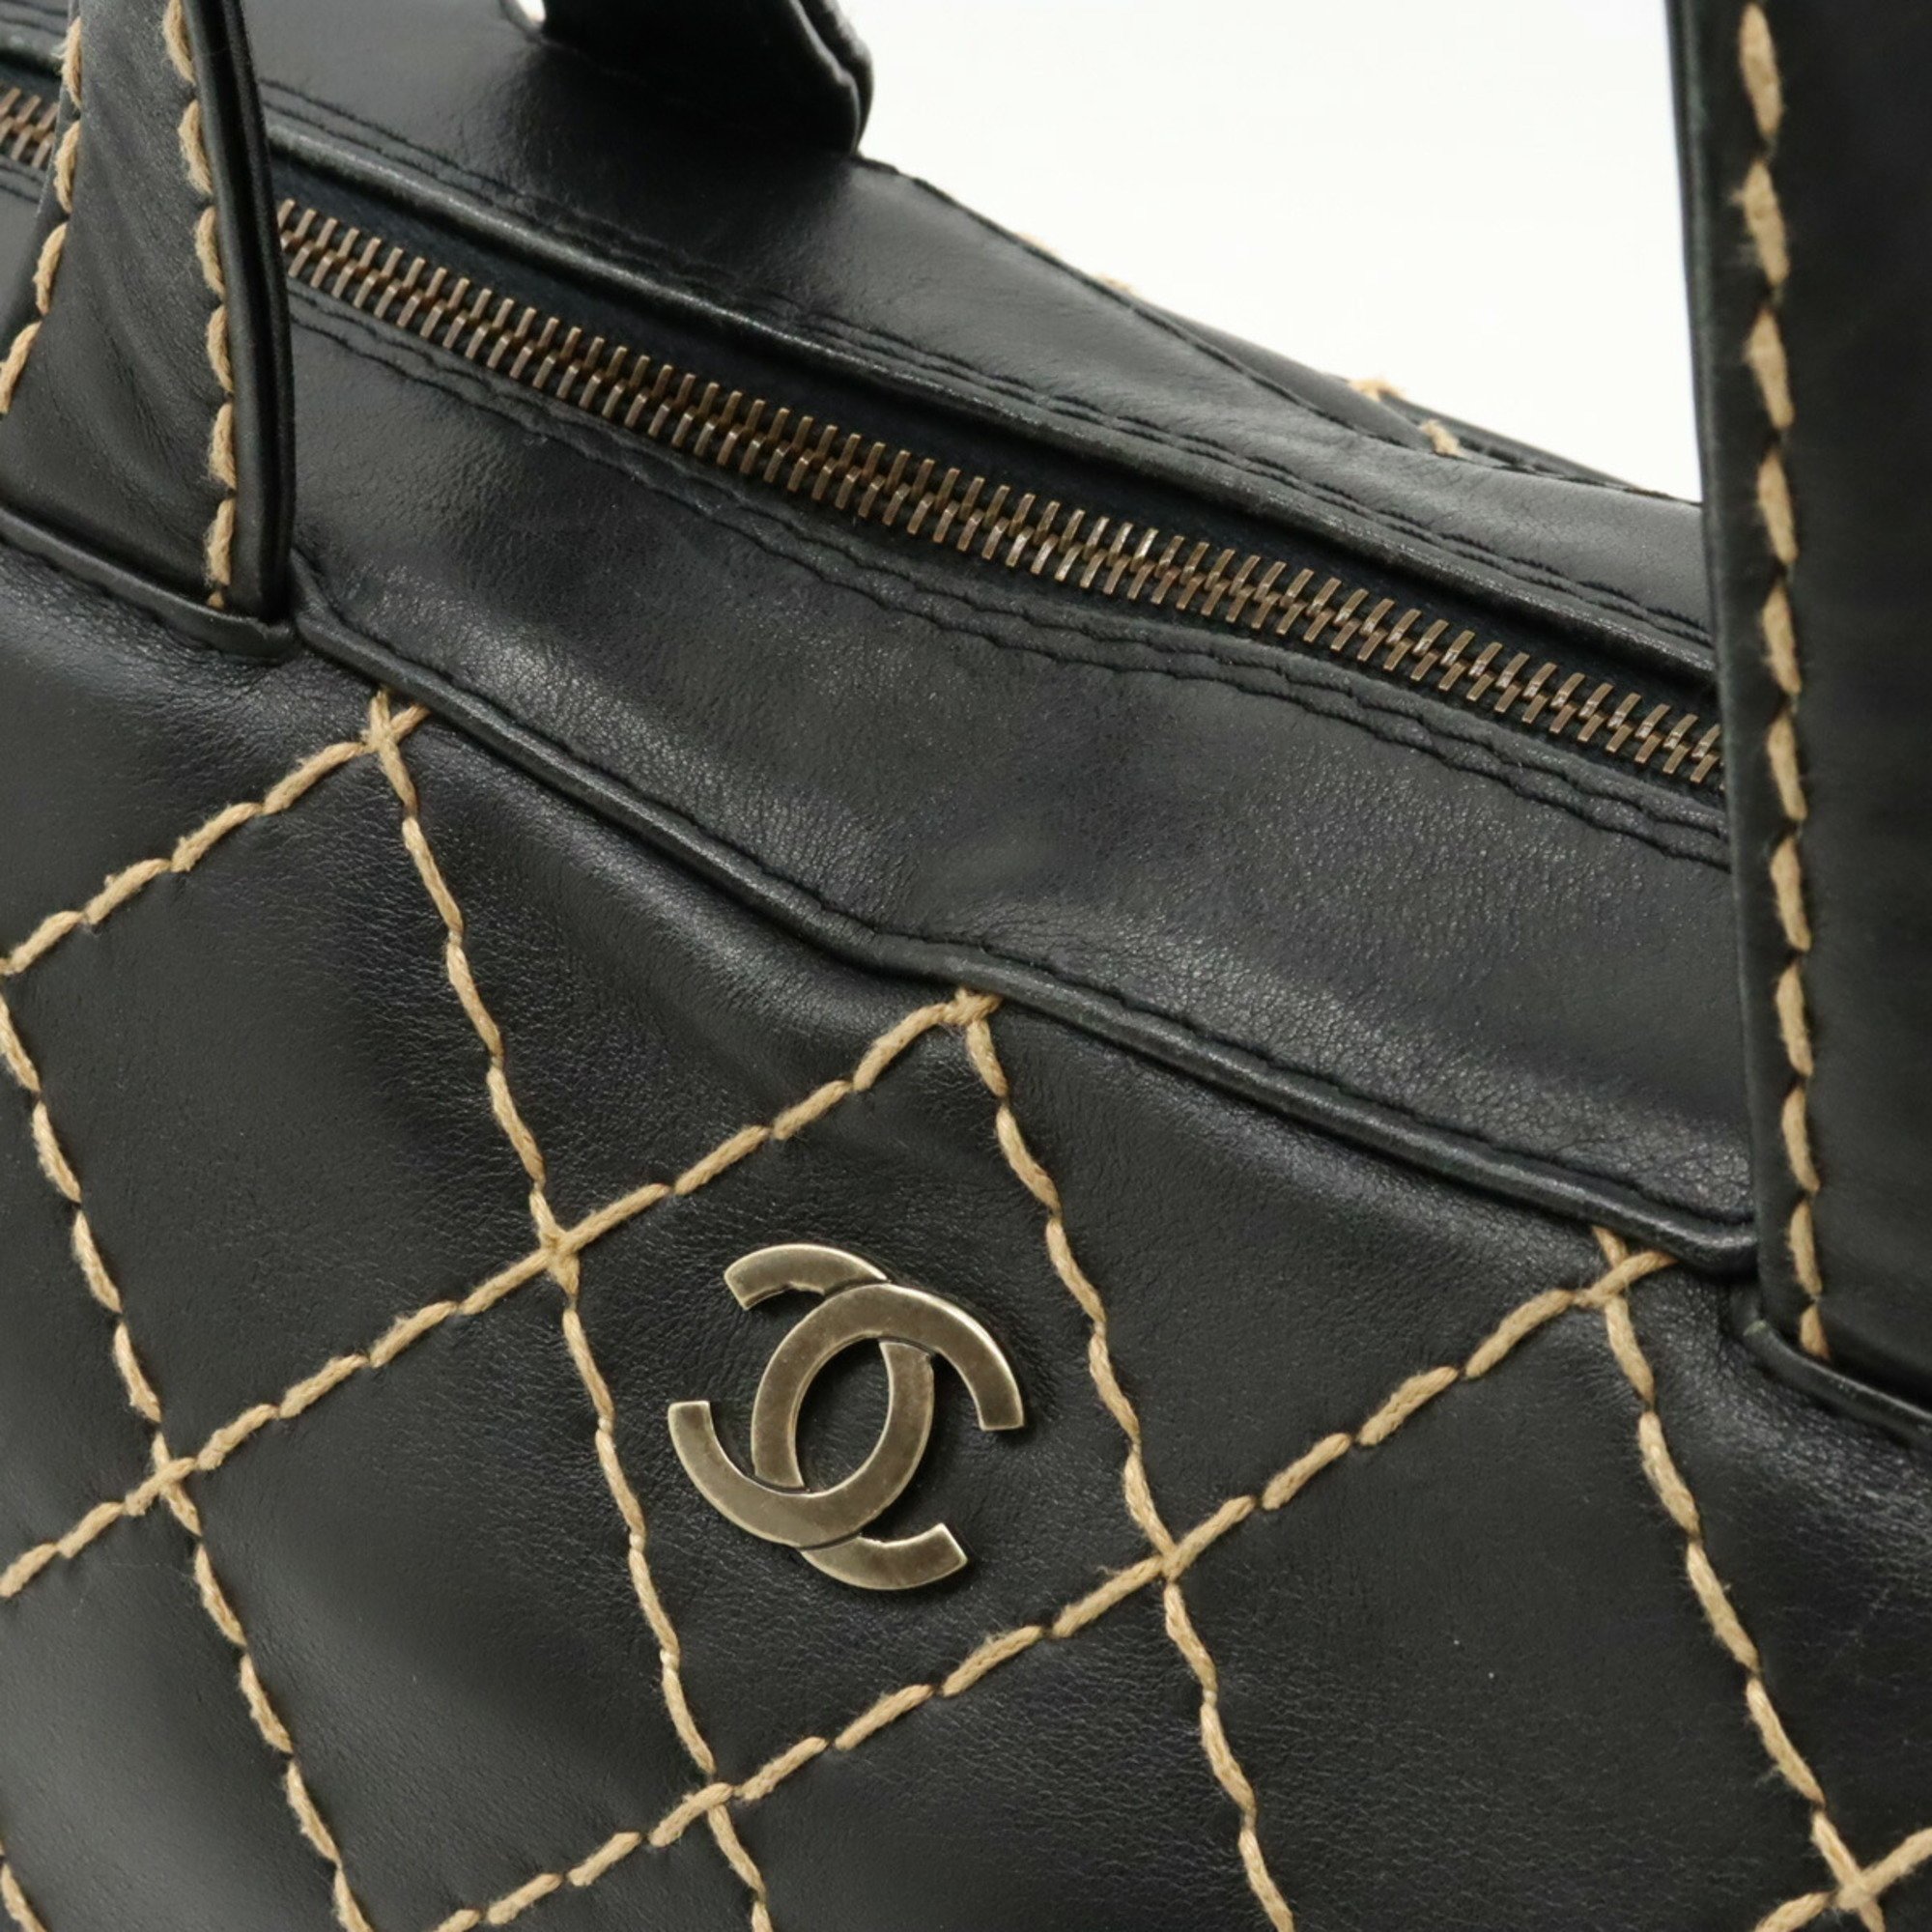 CHANEL Wild Stitch Handbag Boston Bag Leather Black A14692